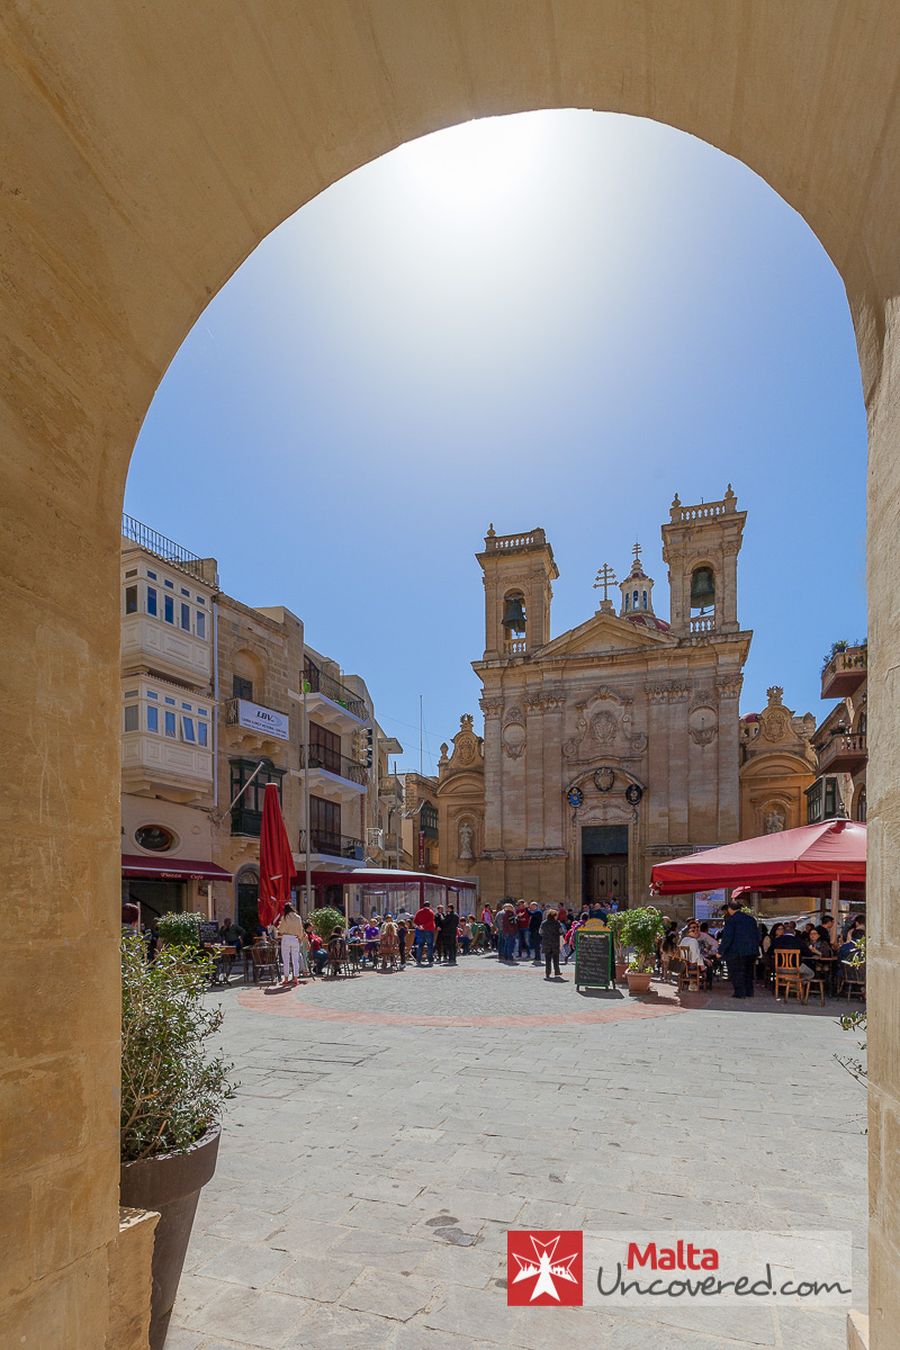 St. George's Basilica, Victoria, Gozo